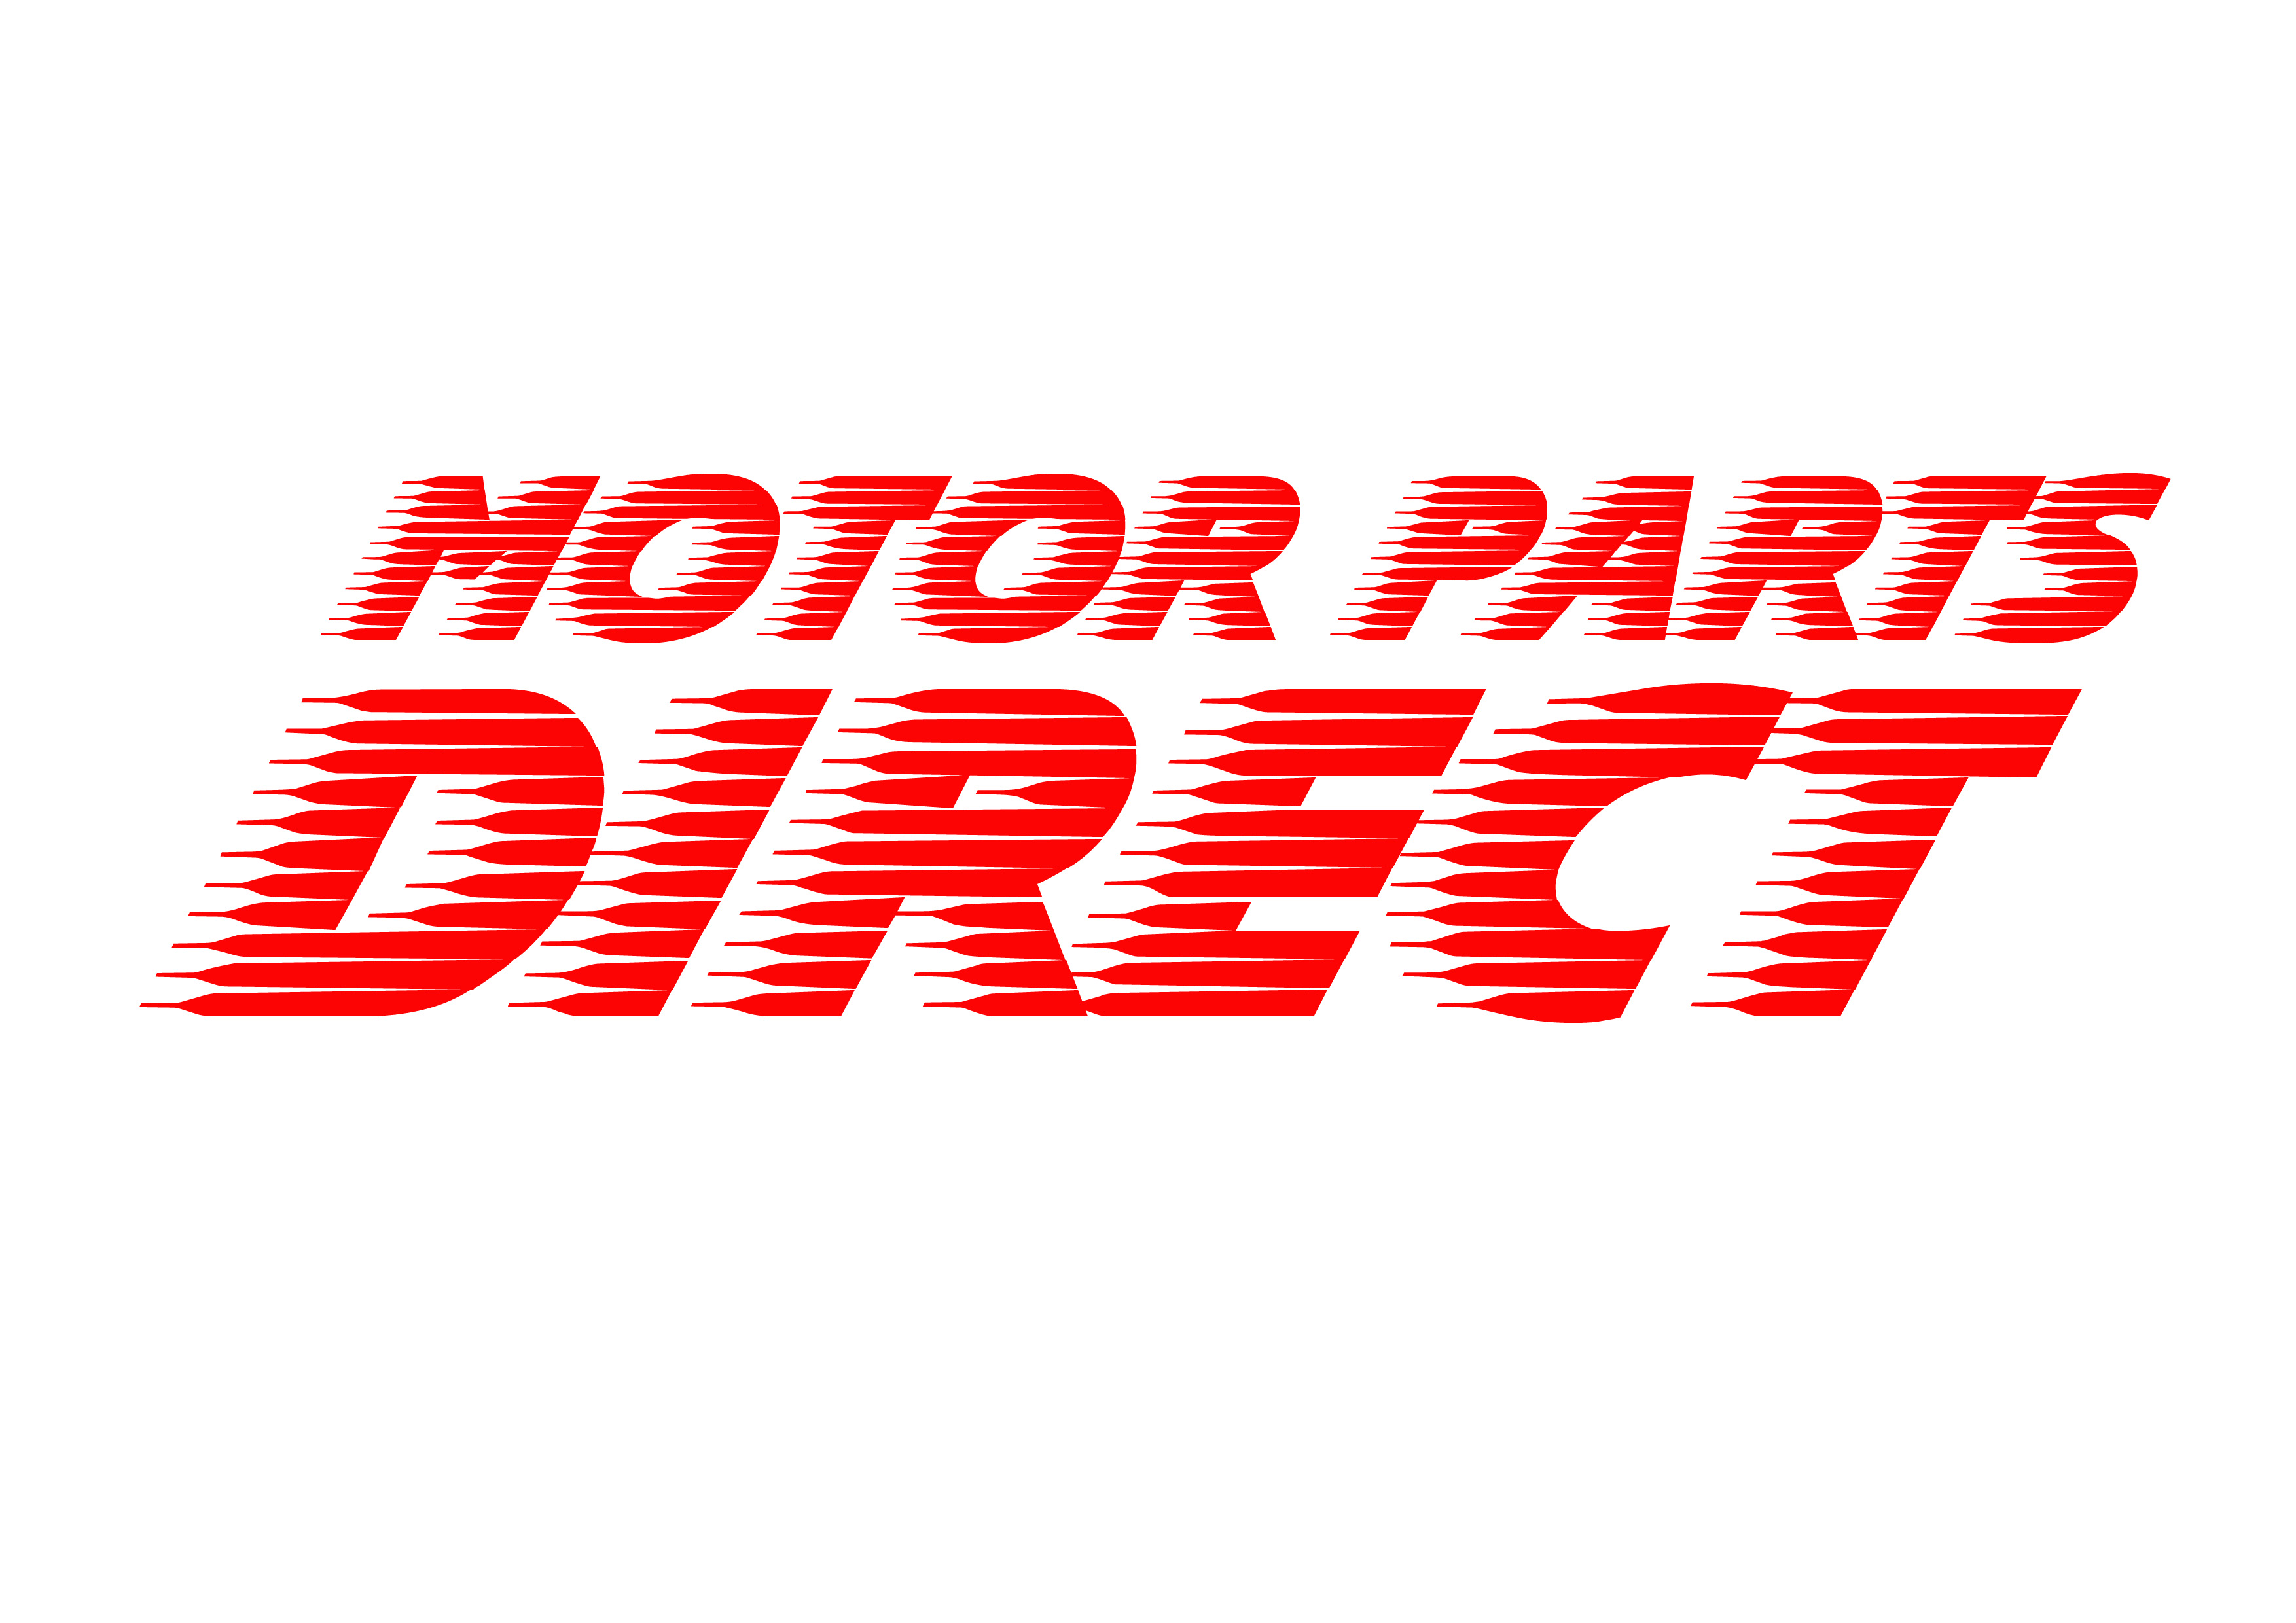 Motor Parts Direct